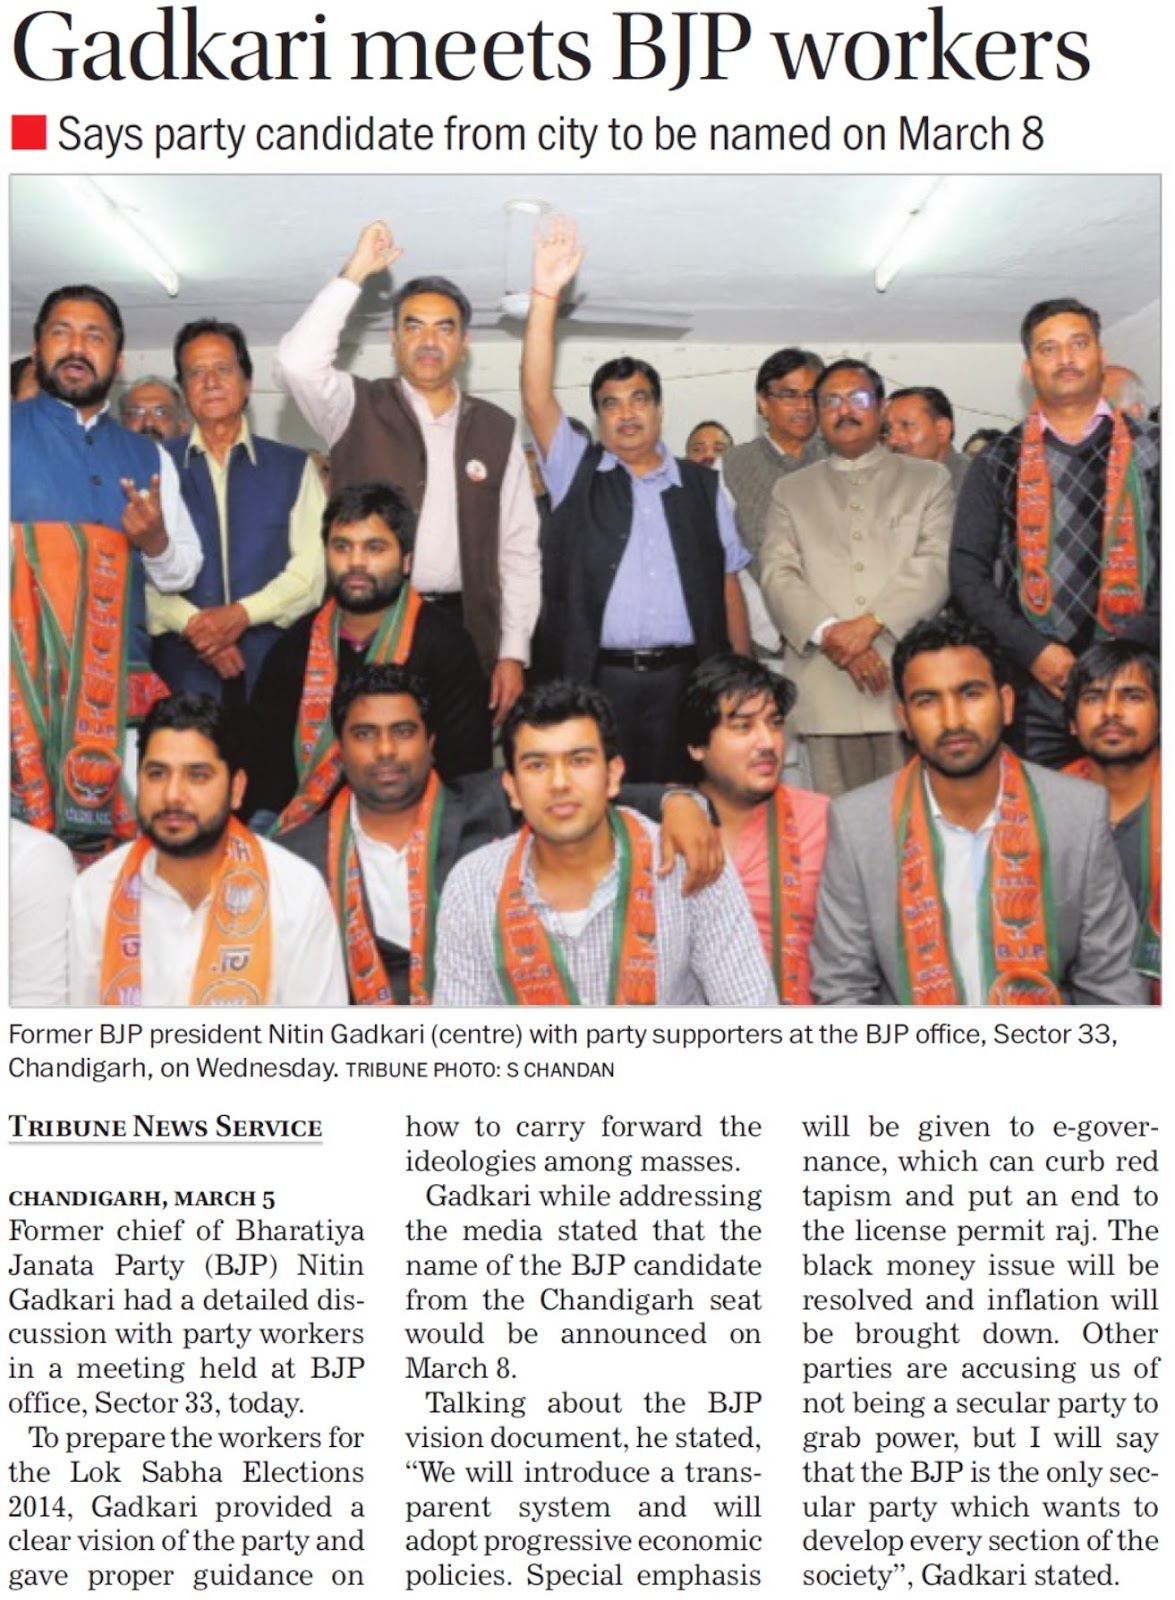 Former BJP president Nitin Gadkari, Ex-MP Satya Pal Jain, Harmohan Dhawan with party supporters at the BJP office, Chandigarh, on Wednesday. Tribune Photo. S. Chandan